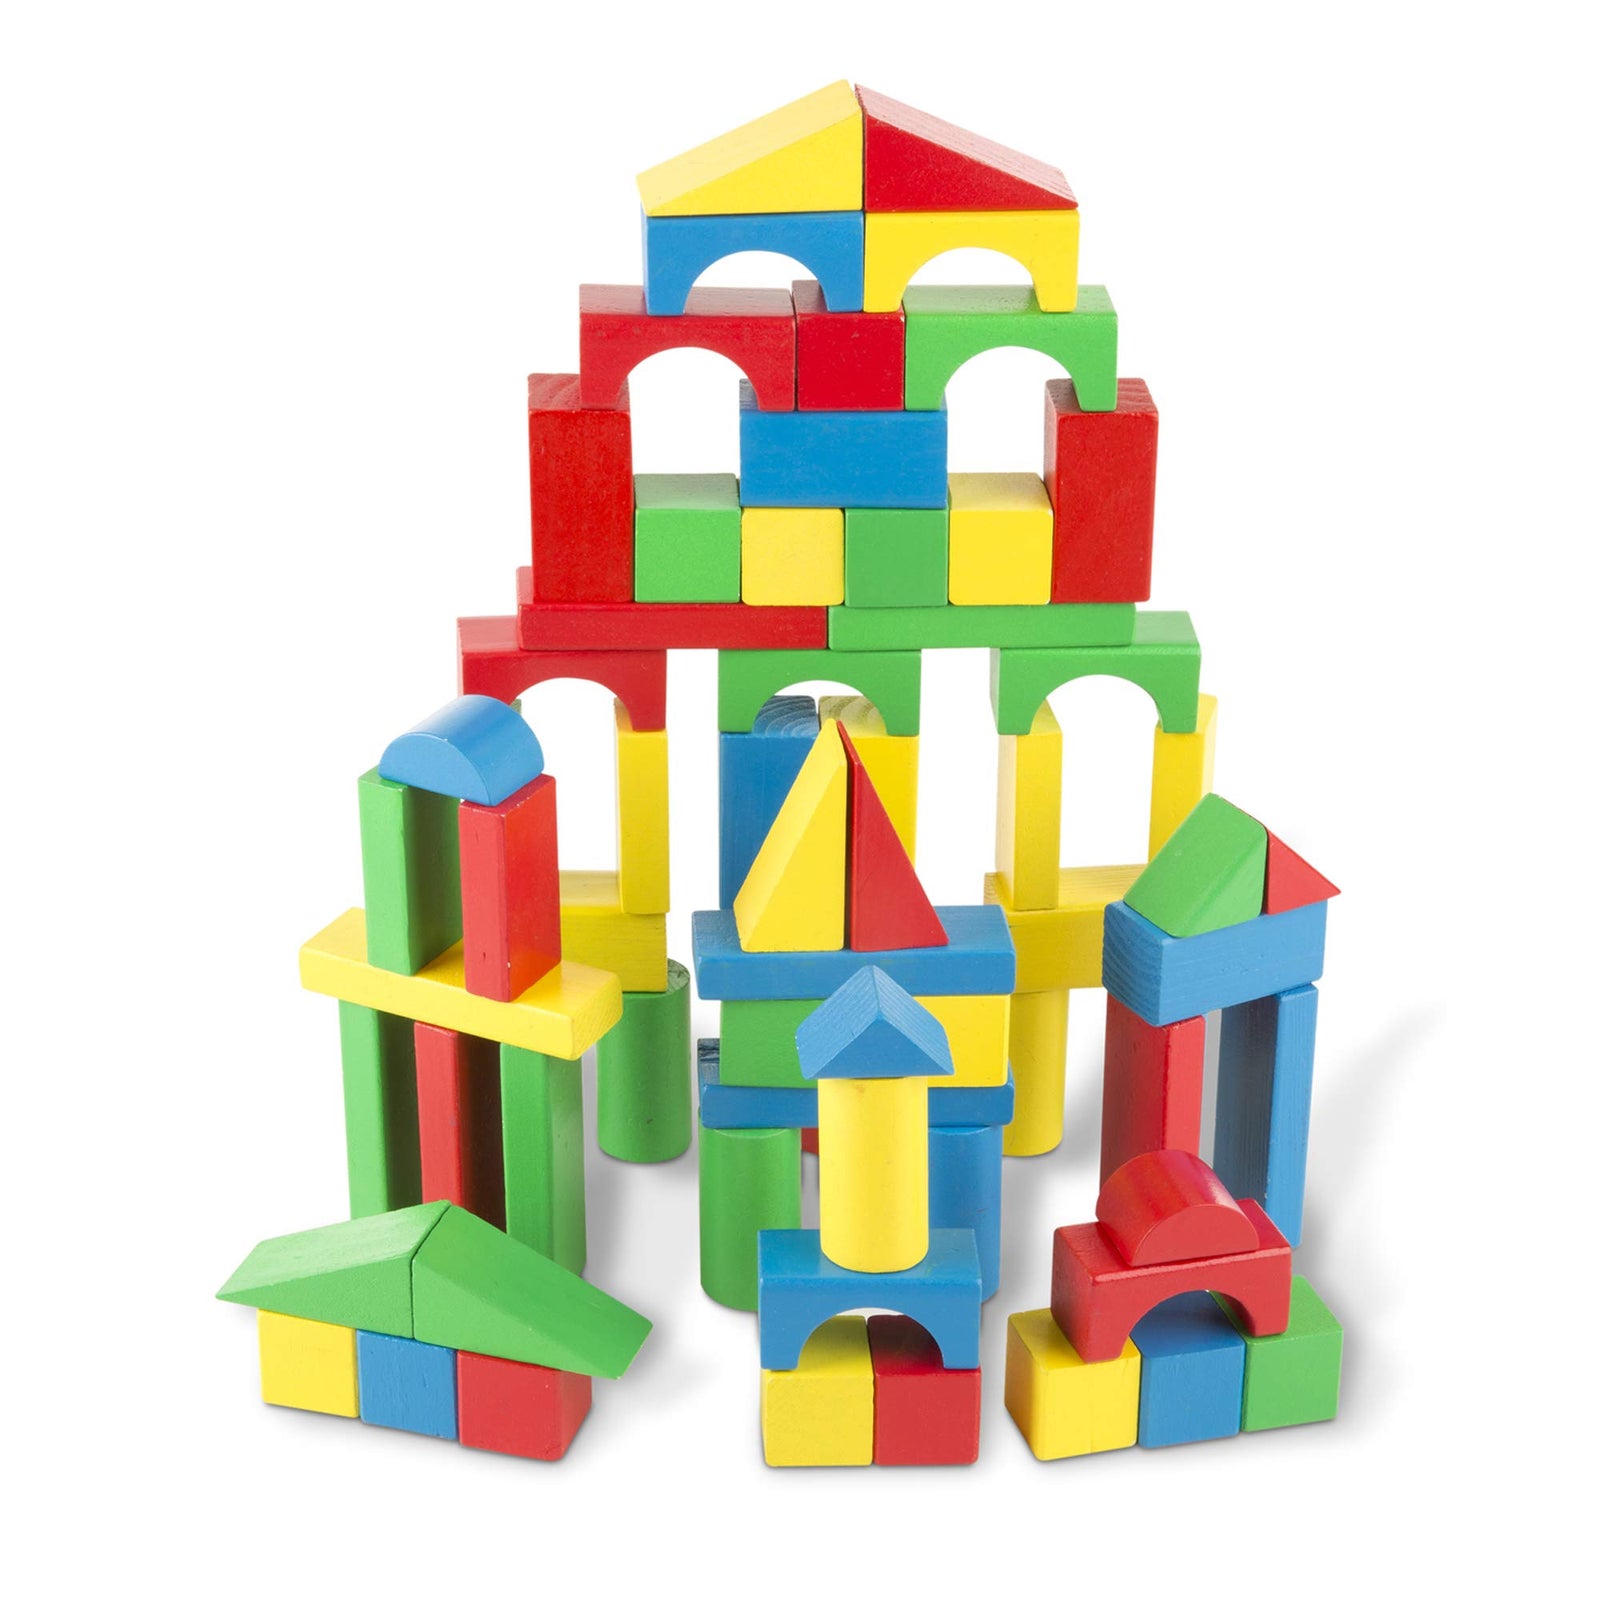 Melissa & Doug Wooden Building Blocks Set - 100 Blocks in 4 Colors and 9 Shapes